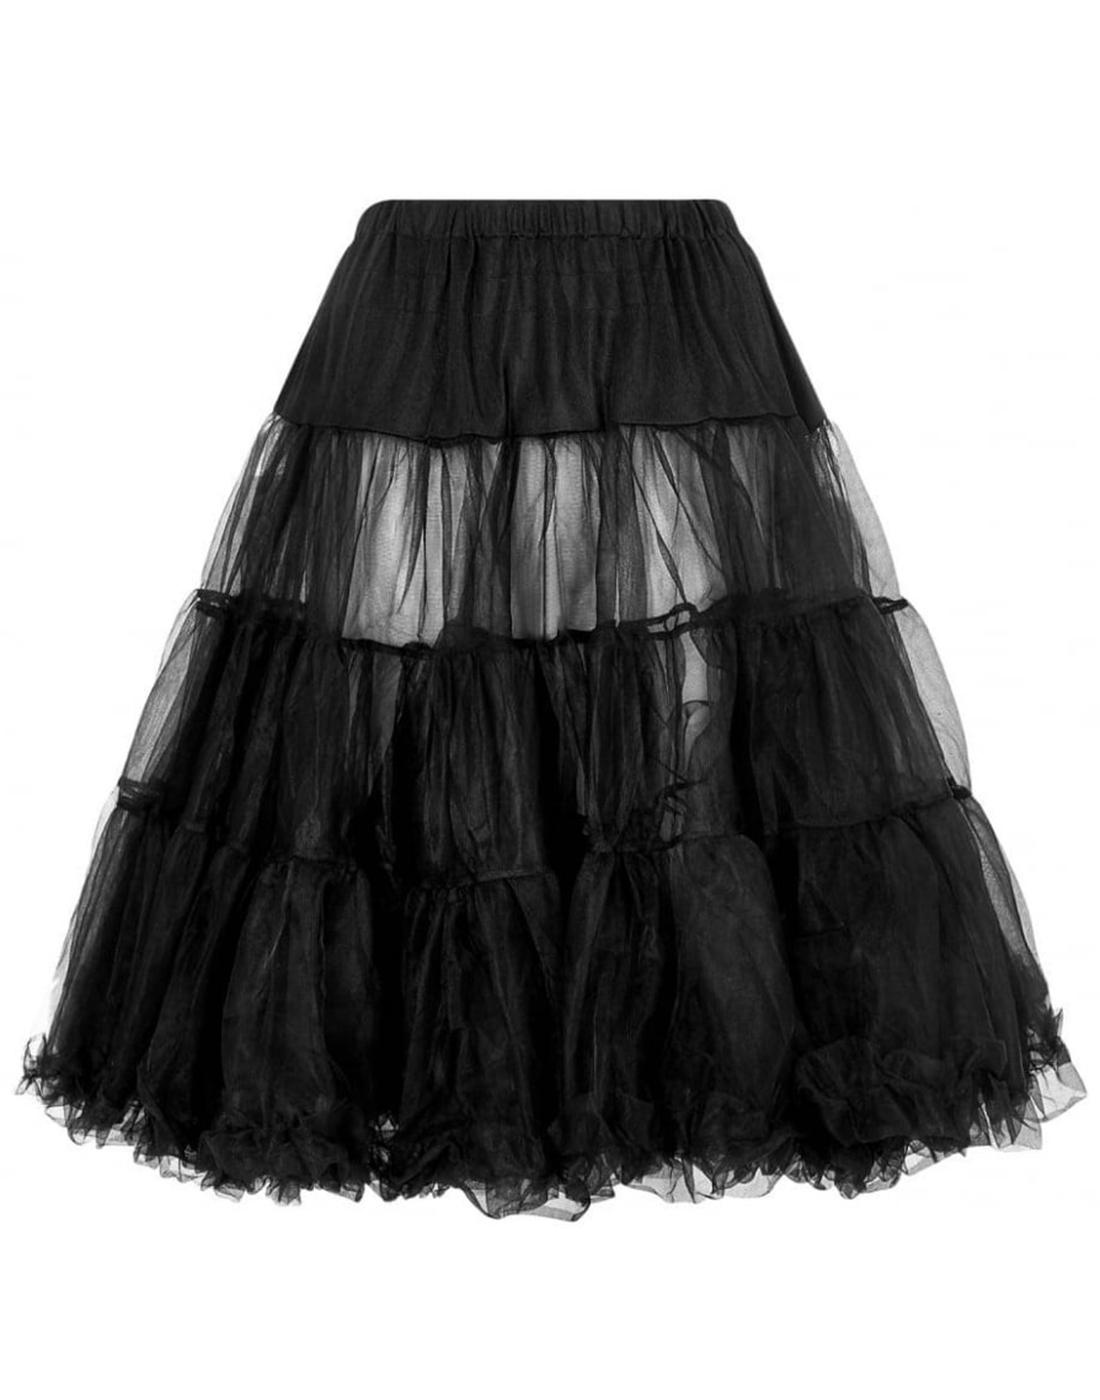 Maddy COLLECTIF Retro Vintage Petticoat in Black